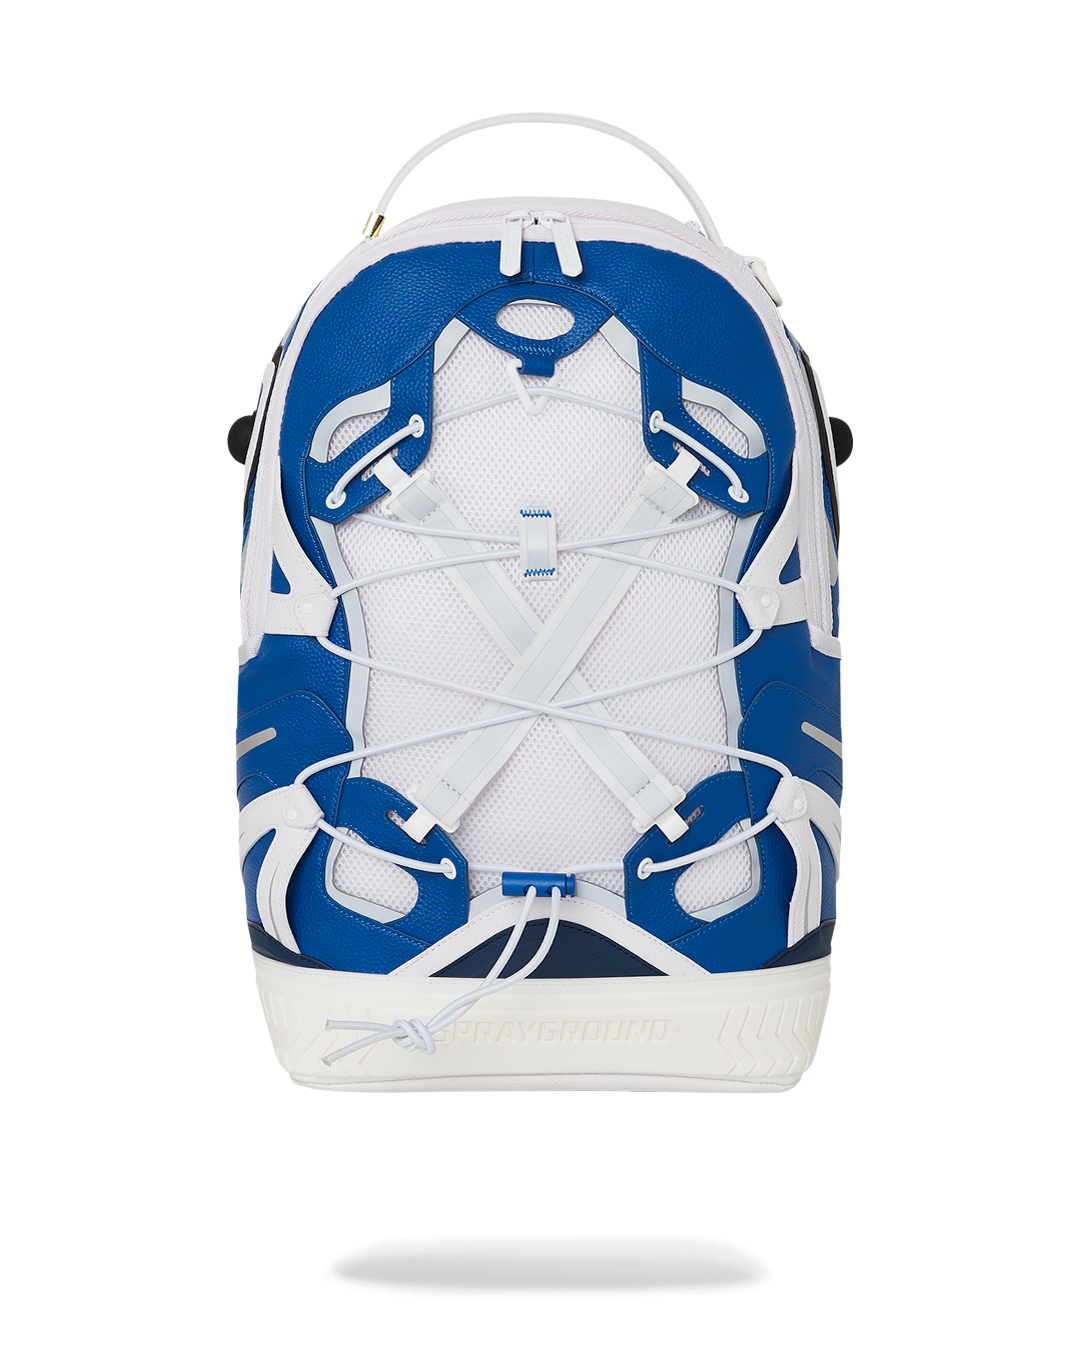 Sprayground backpack Nimbus Blue